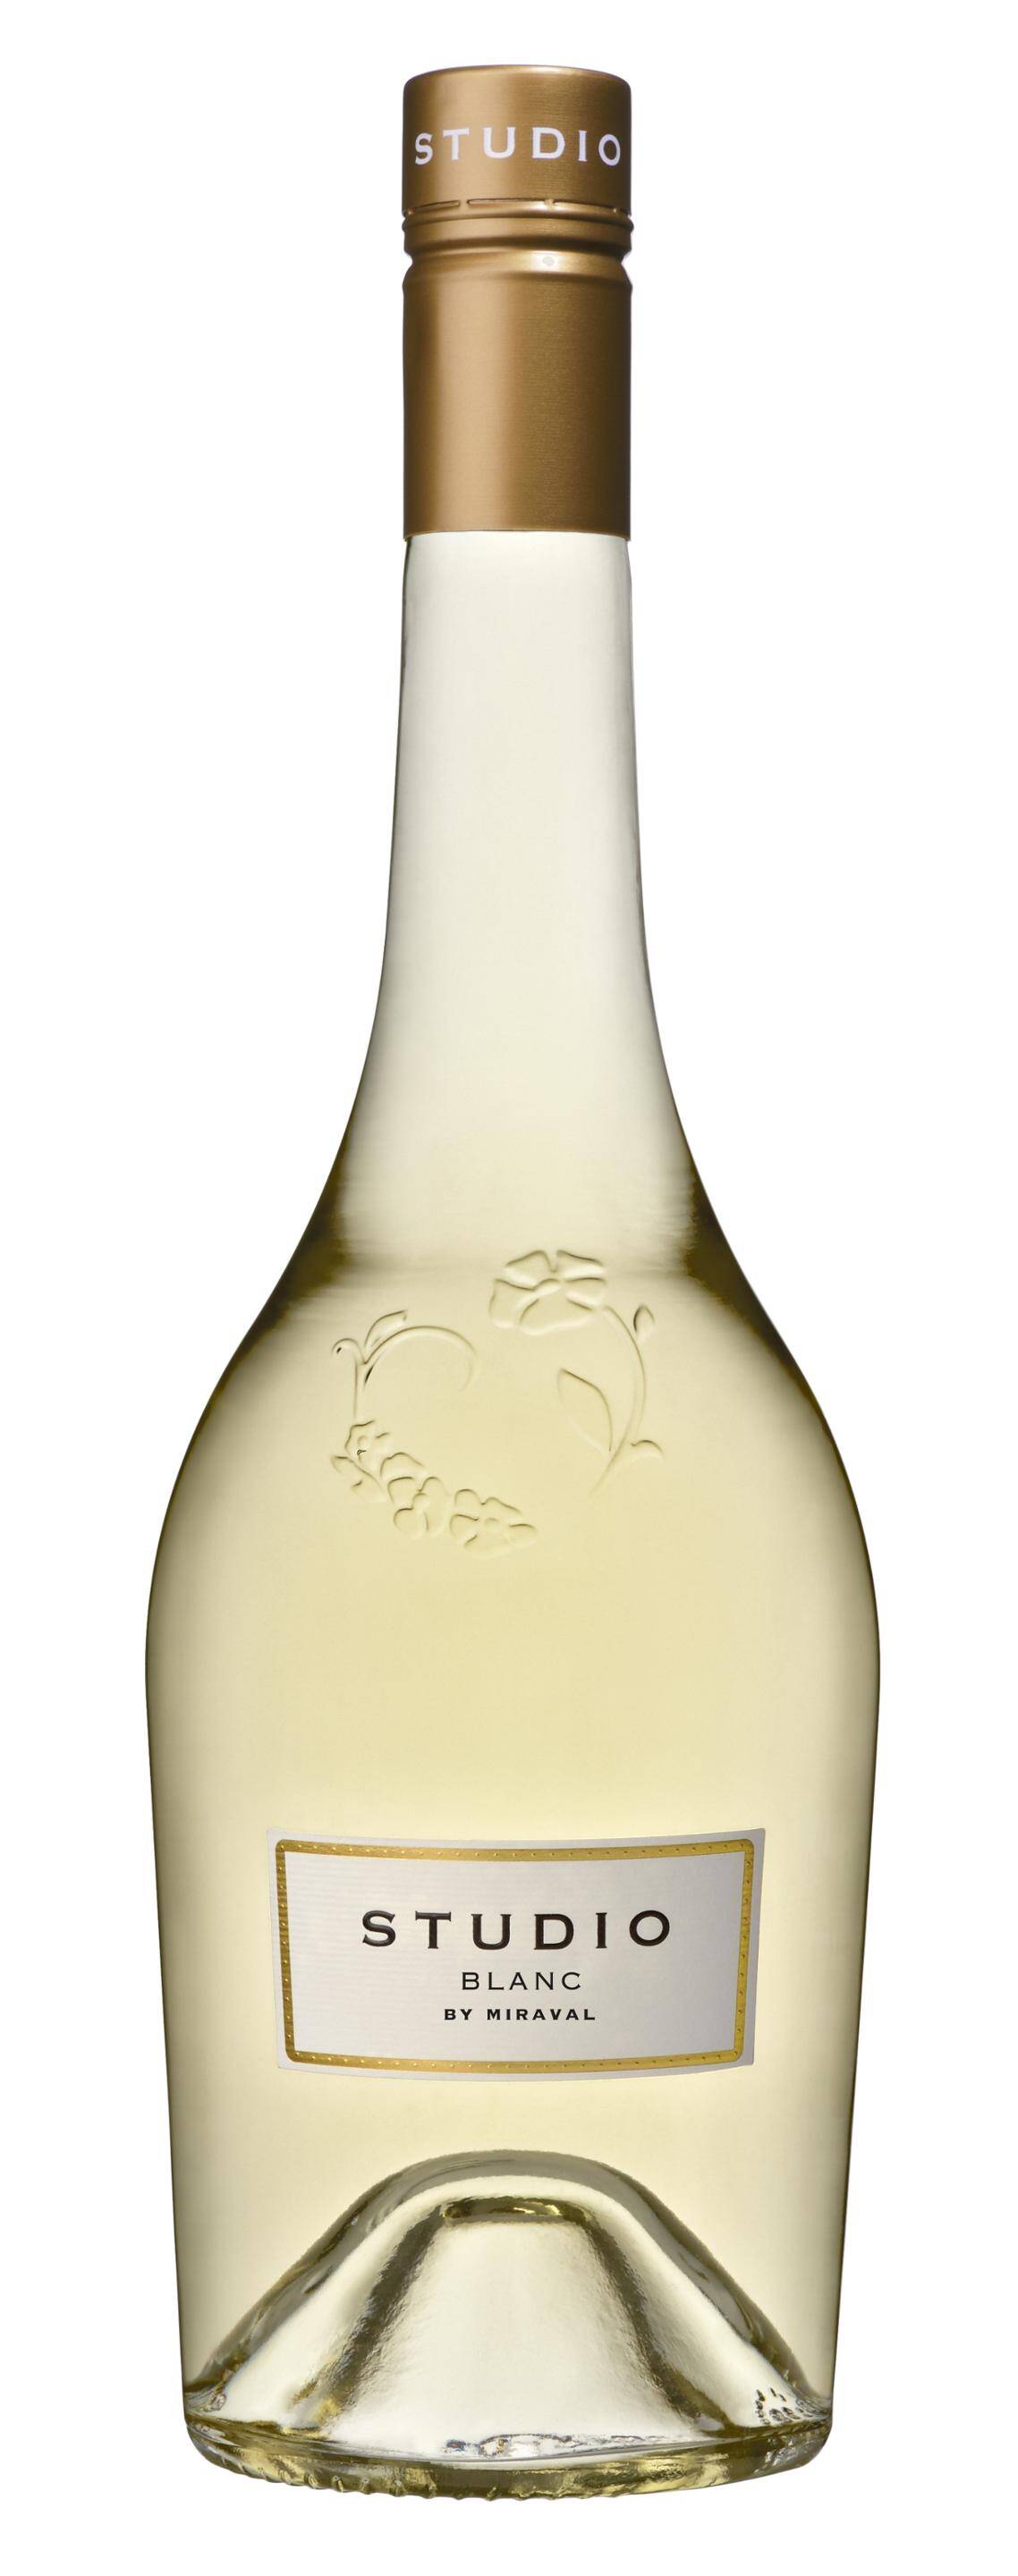 Wino fr. Studio by Miraval Blanc IGP 12,5% BW 750ml/6 e